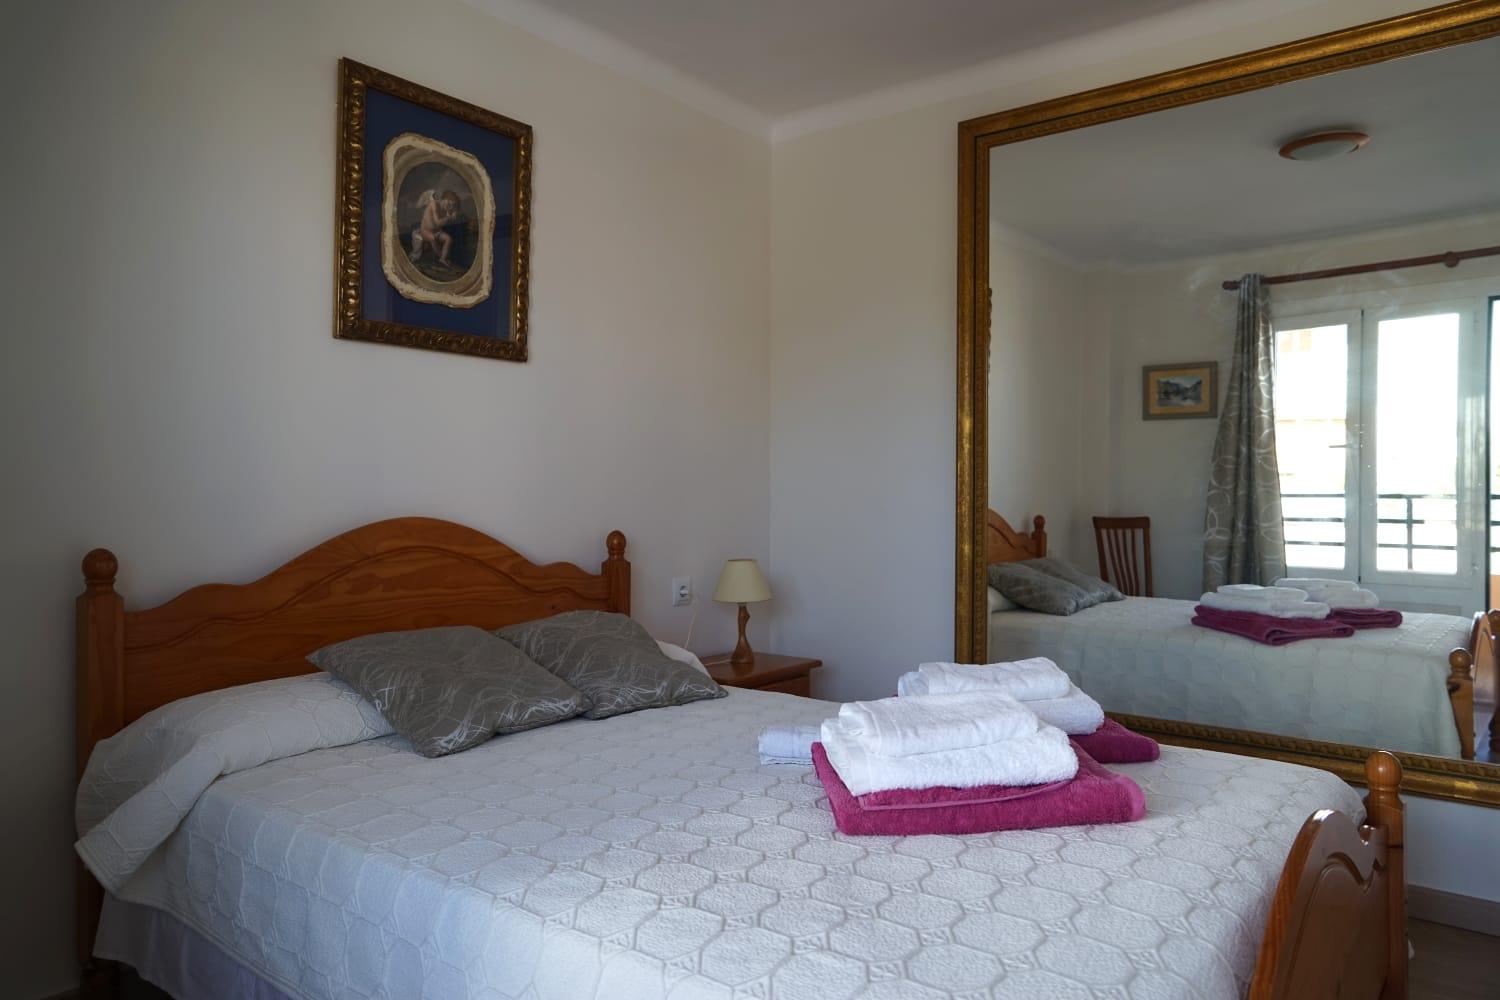 Saridakis - 2 bedroom apartment in Palma